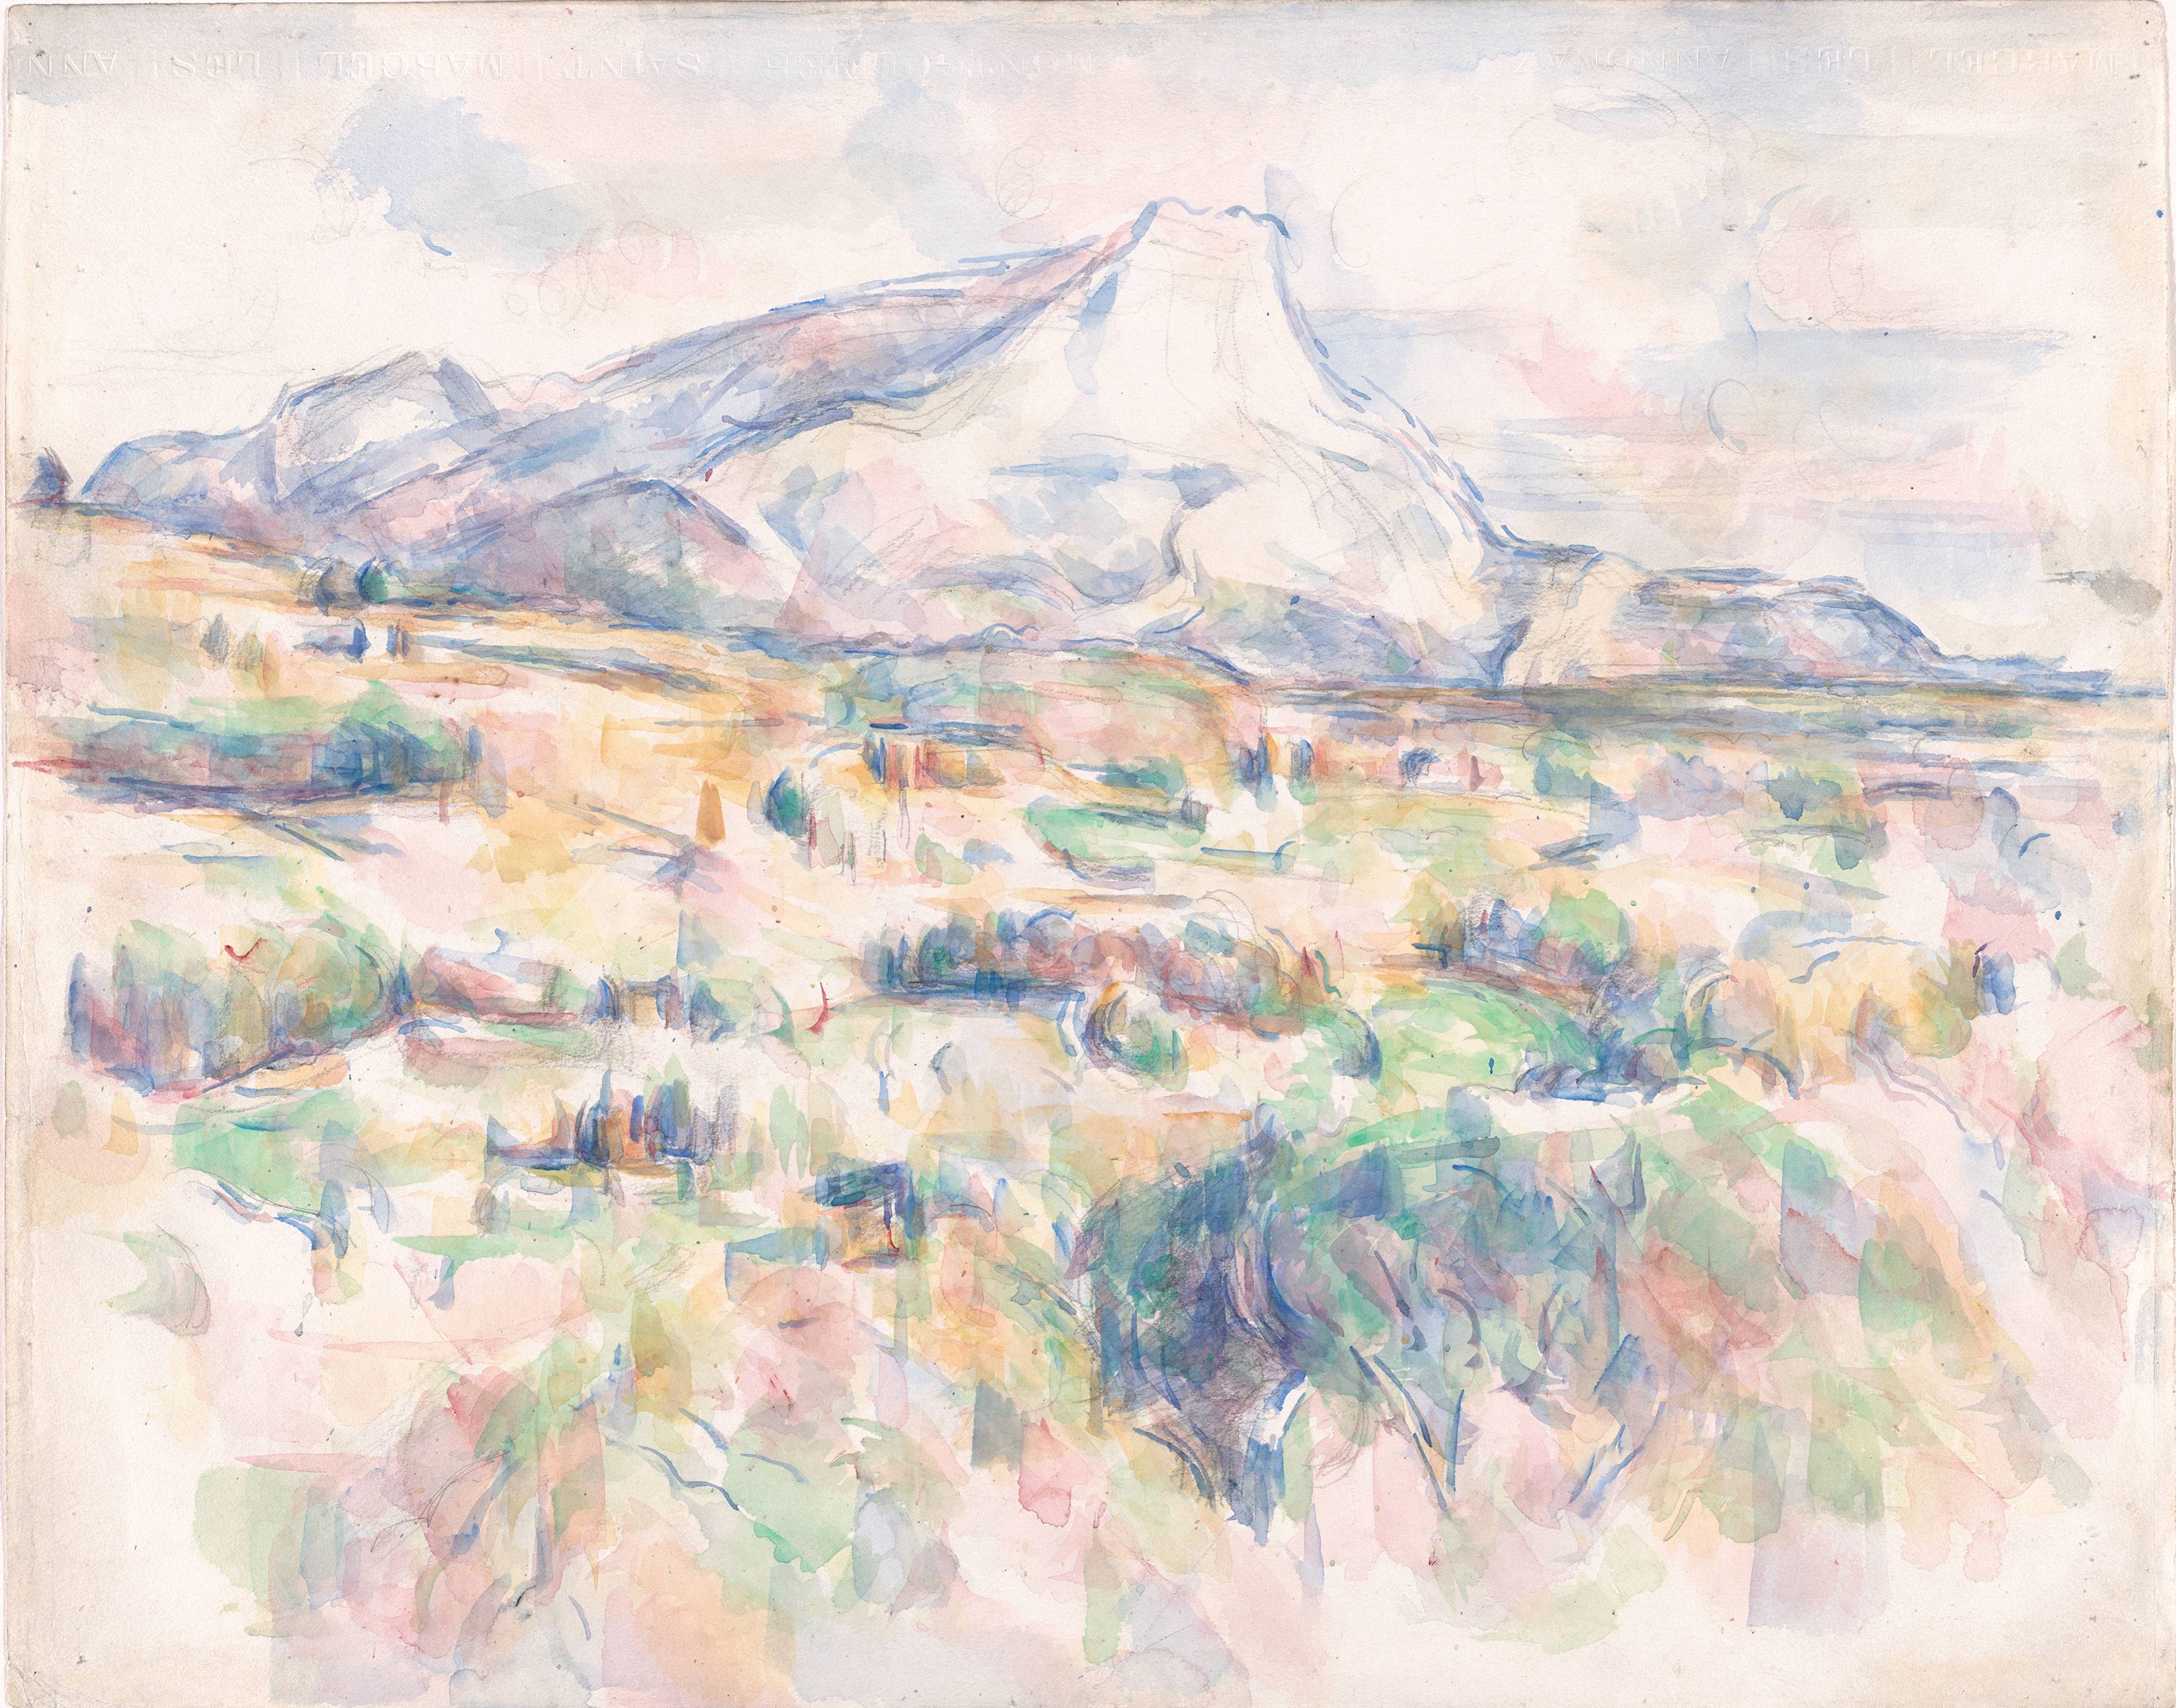 FilePaul Cézanne  Pot and Soup Tureen  Google Art Projectjpg   Wikimedia Commons